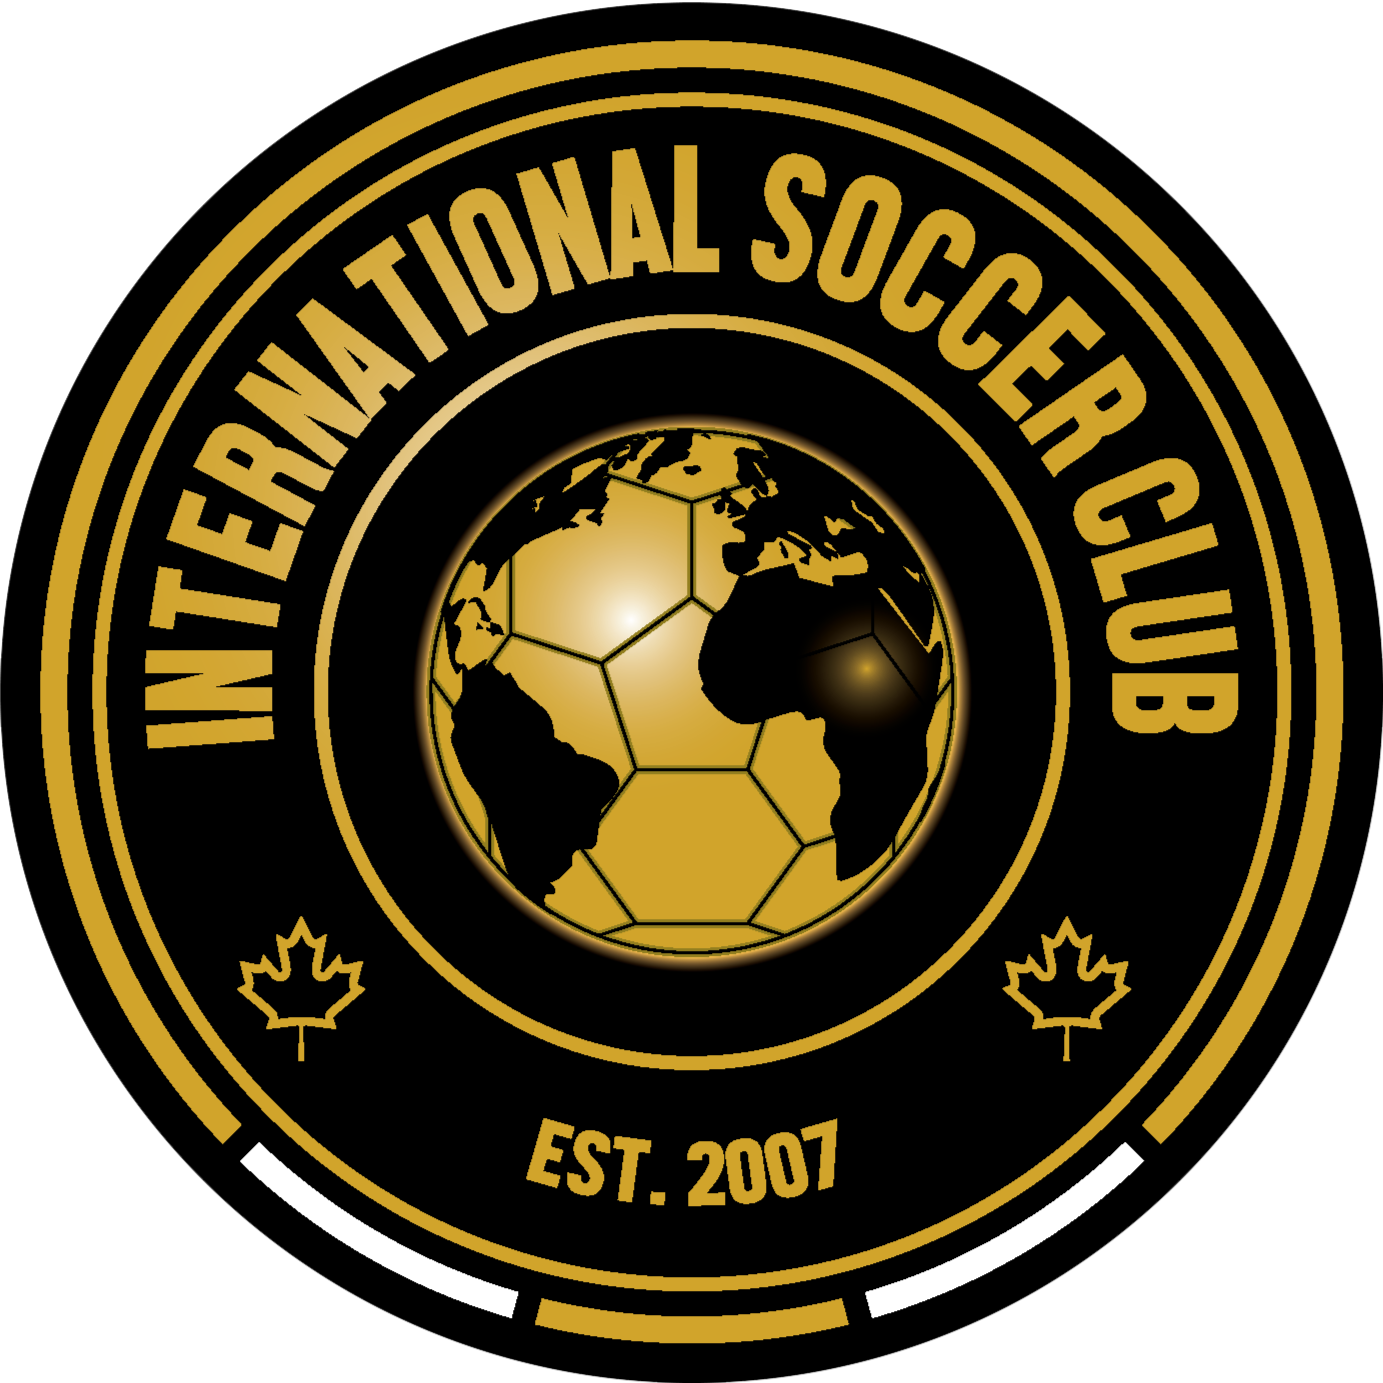 Youth Kids Soccer League - International Soccer Club